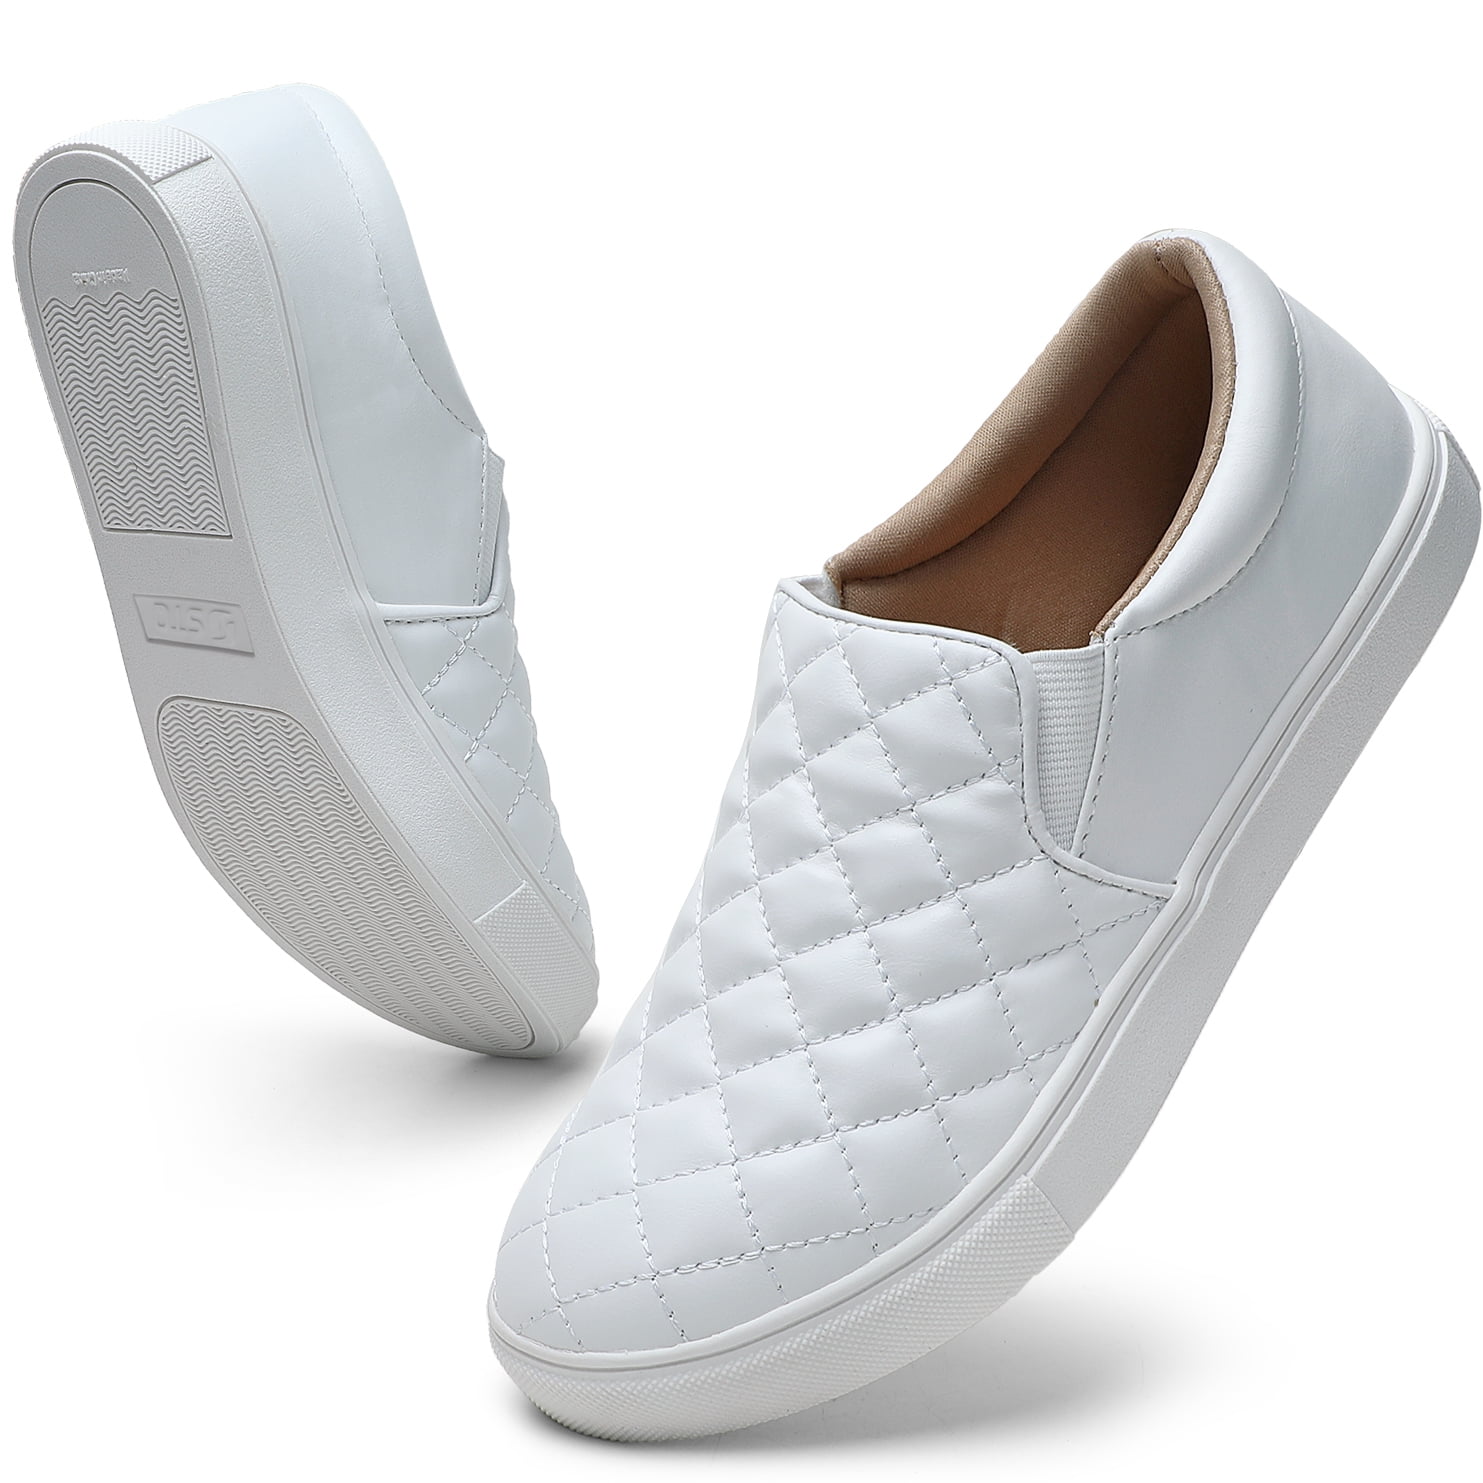 STQ Women's Slip on Sneakers Platform Walking Shoes Casual Loafers ...